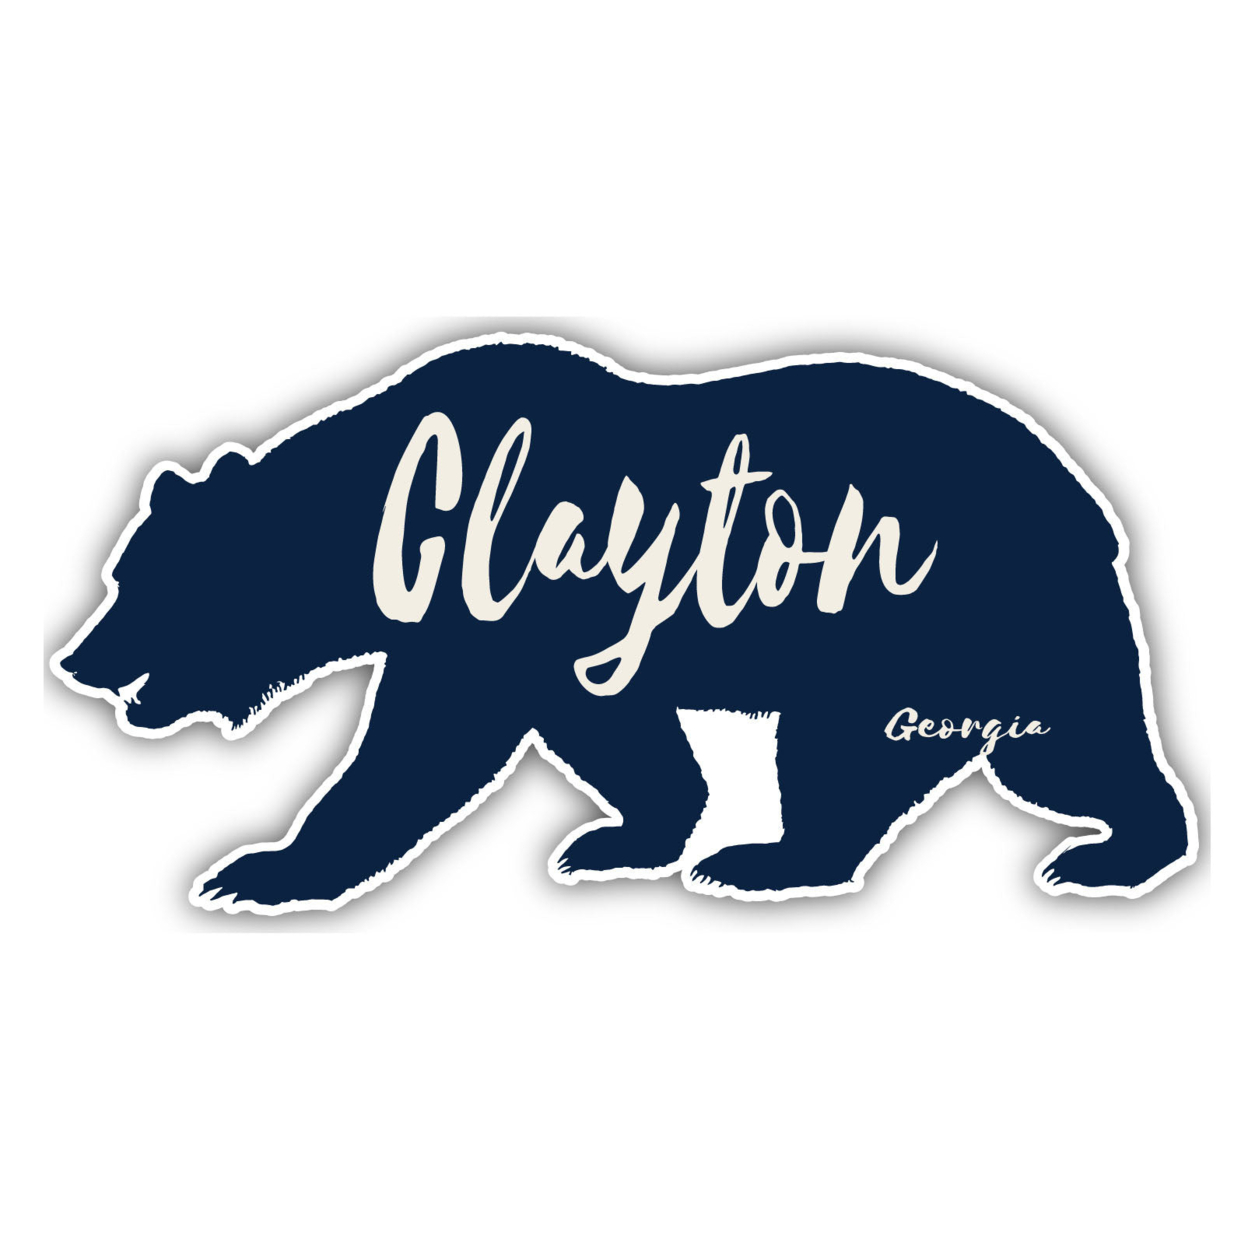 Clayton Georgia Souvenir Decorative Stickers (Choose Theme And Size) - 4-Pack, 10-Inch, Bear